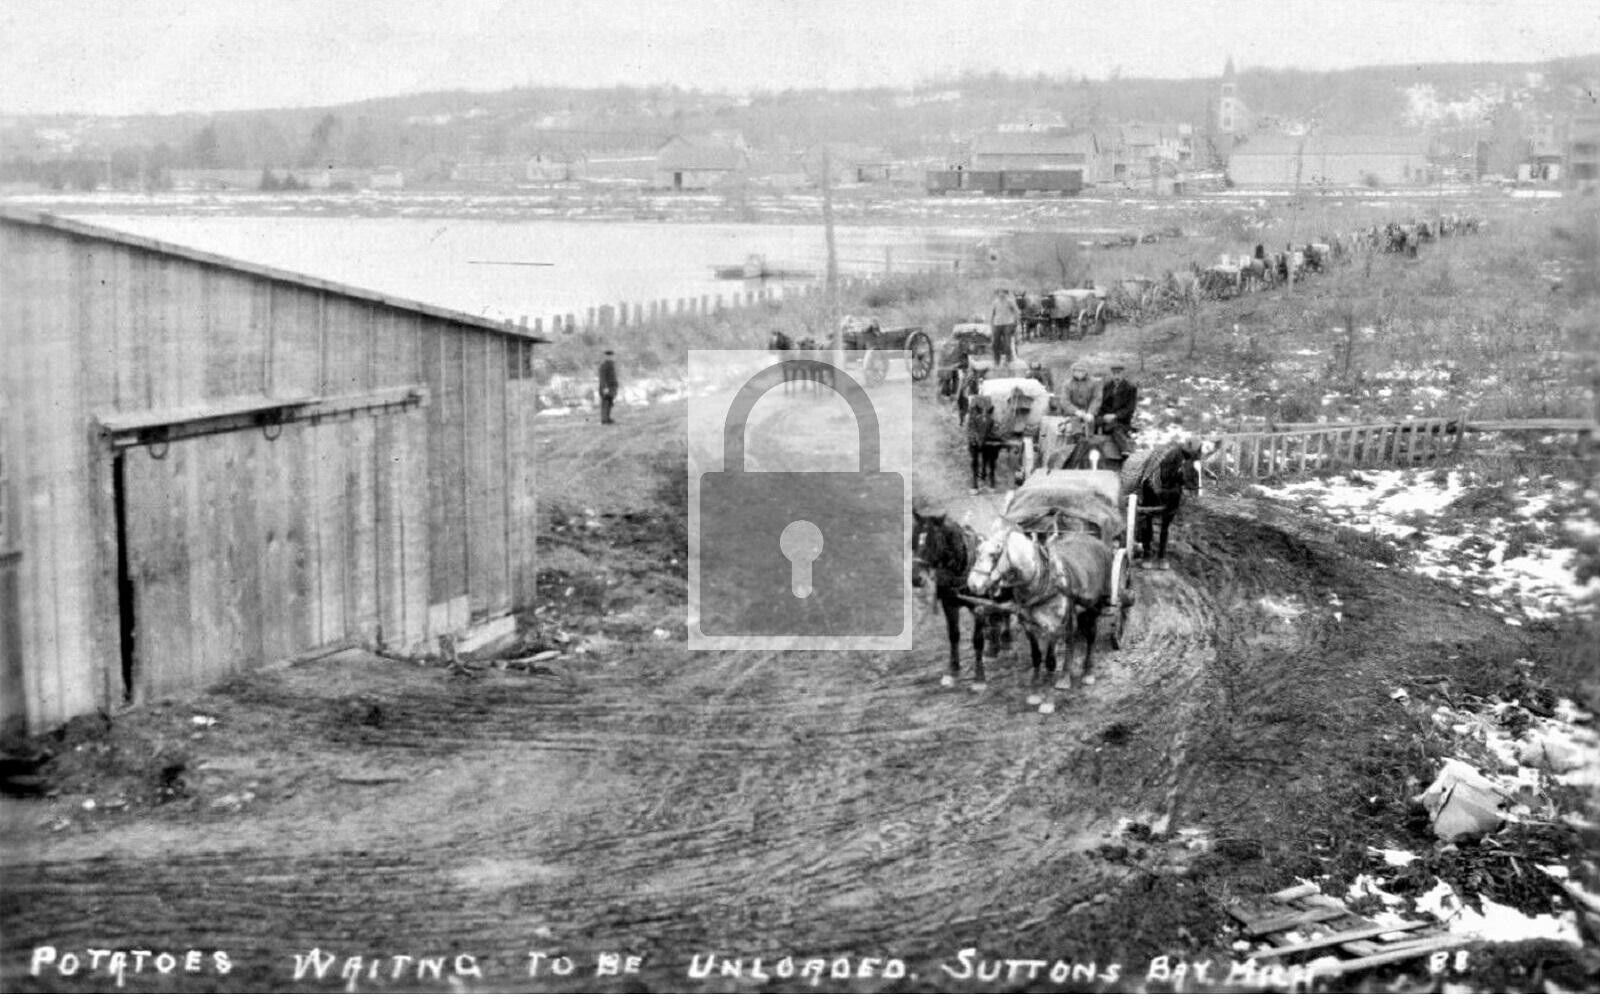 Potato Farm Delivery Wagons Suttons Bay Michigan MI Reprint Postcard